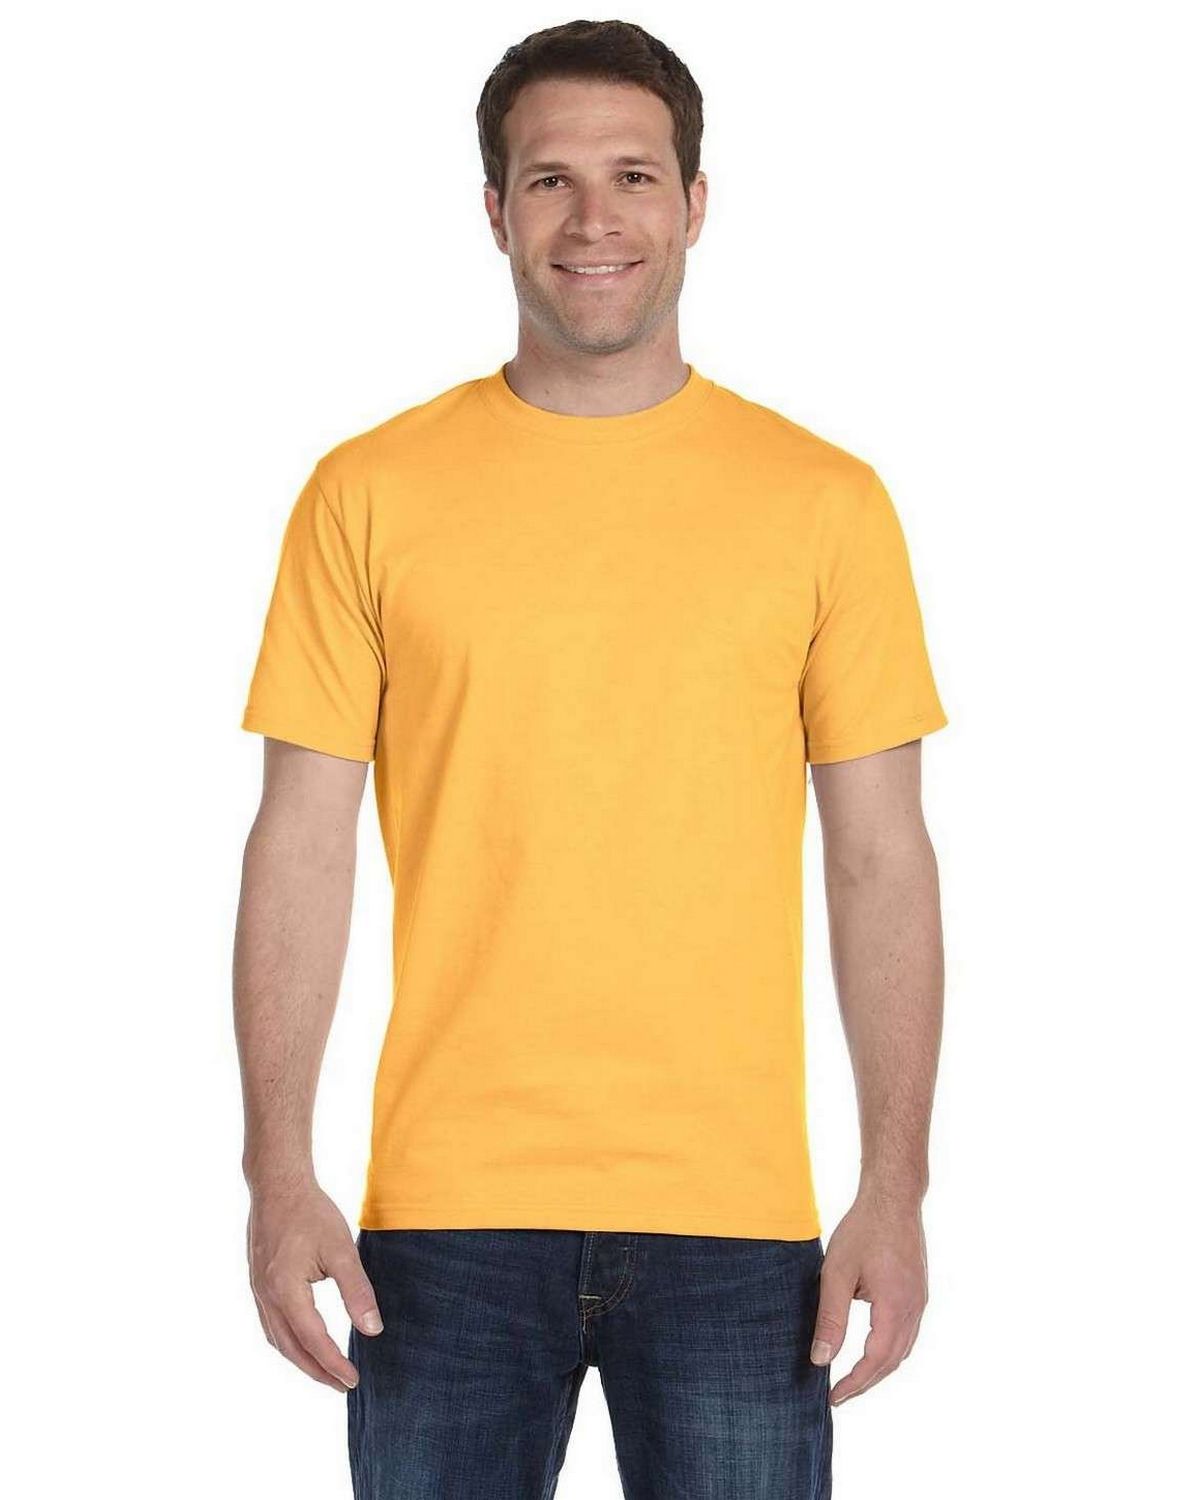 Hanes 5180 Ringspun Cotton Beefy T-Shirt - ApparelnBags.com